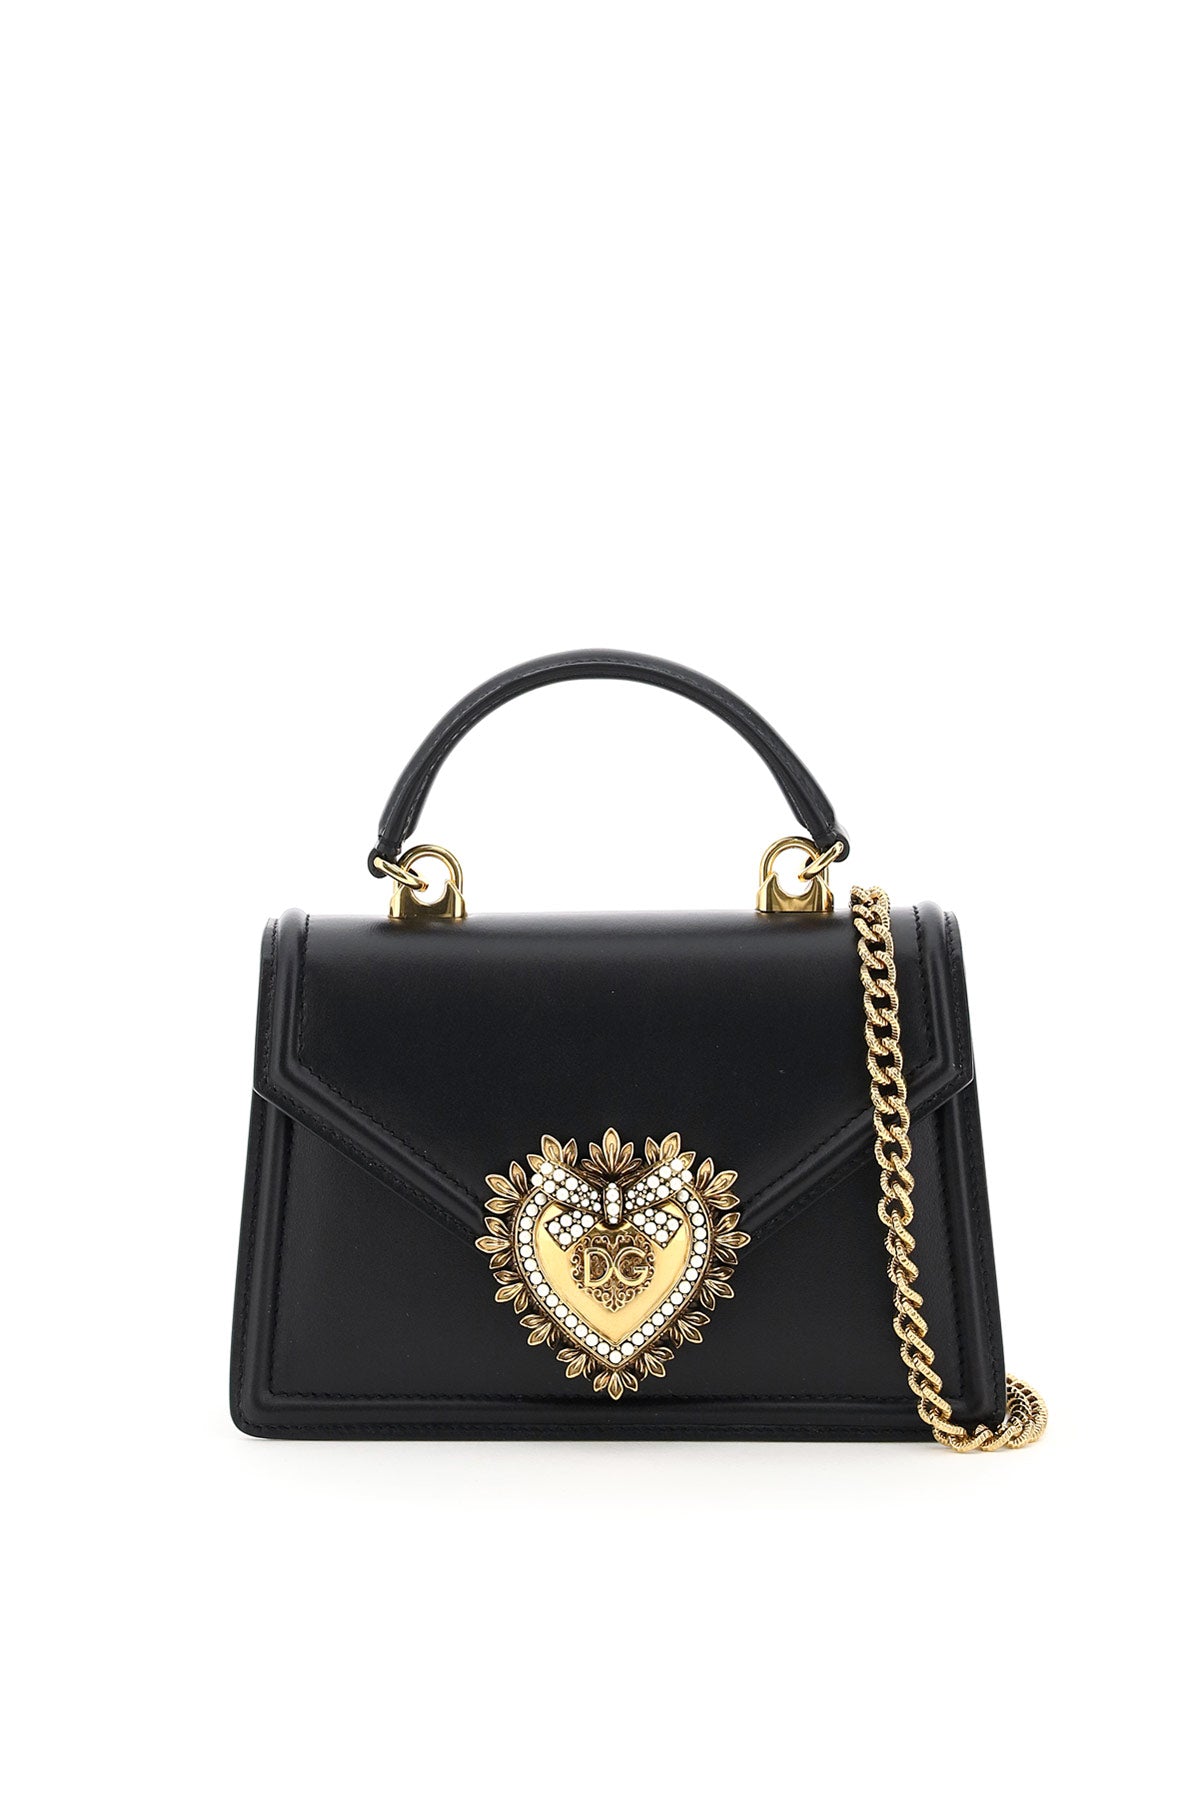 DOLCE & GABBANA Devotion Mini Leather Handbag with Pearl Embellishments, Black – 19x13x4.5 cm